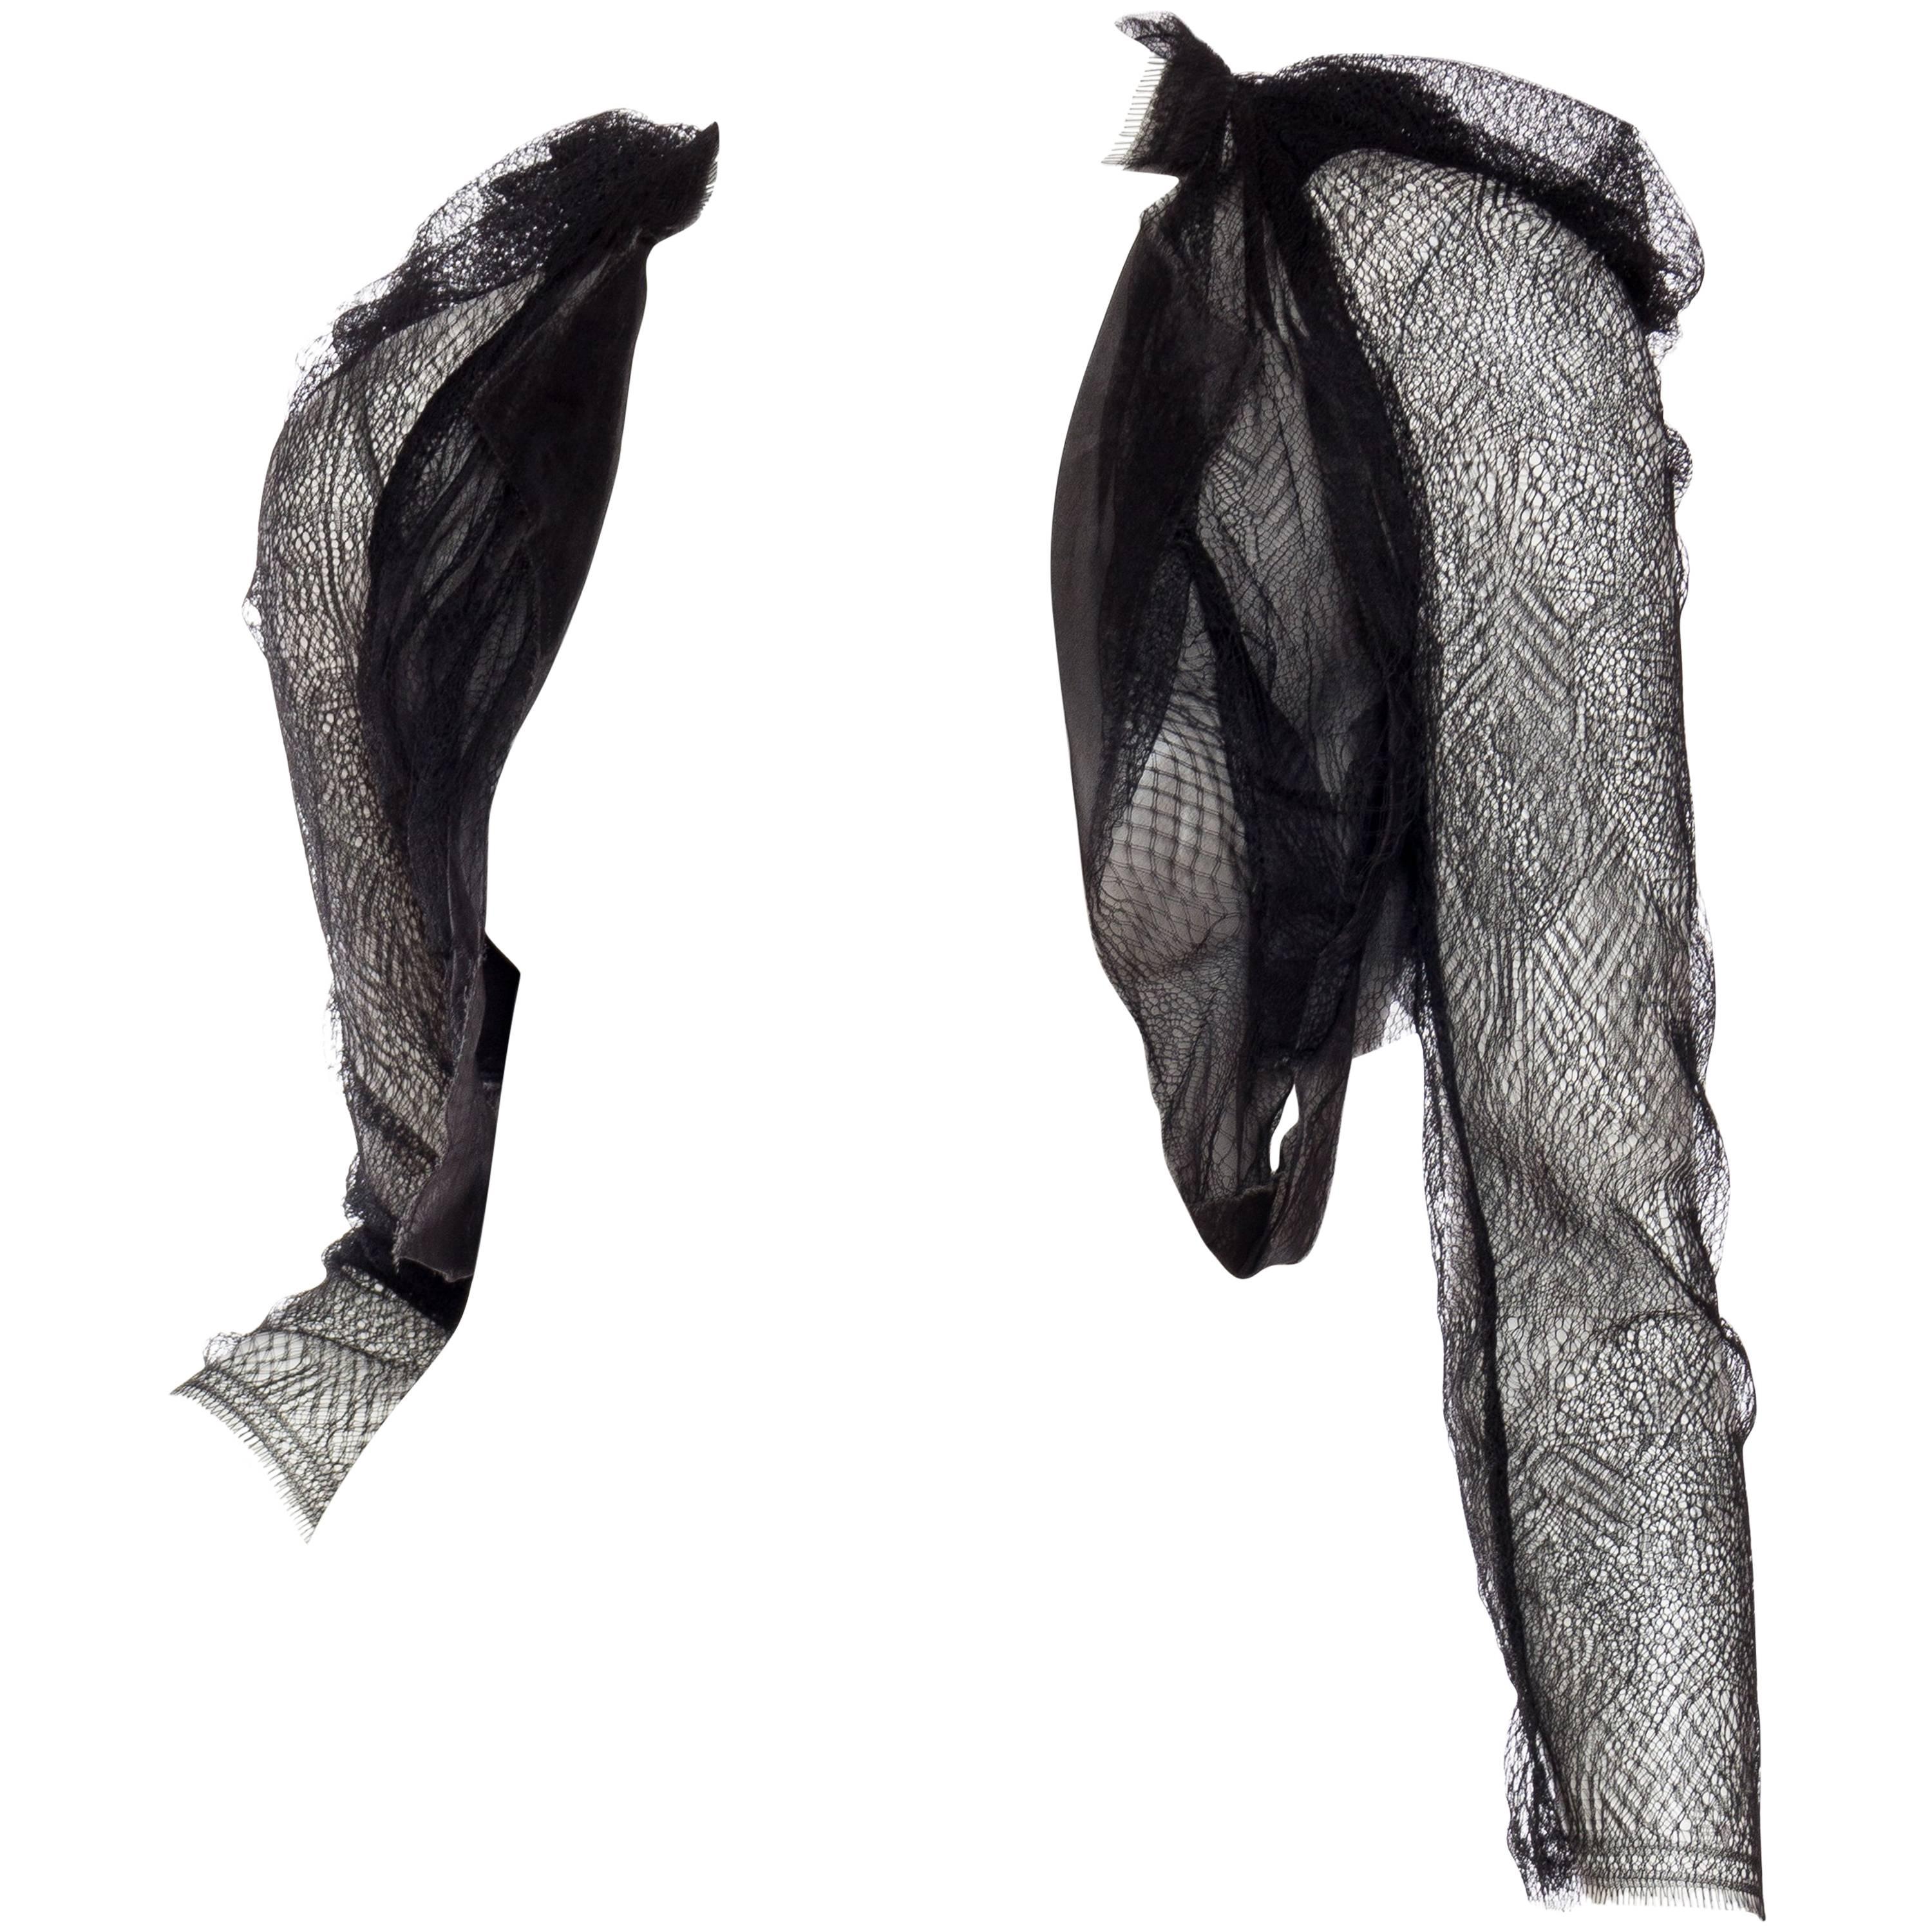 Silk and Lace Deconstructed Bolero Shrug by Sharon Wauchob